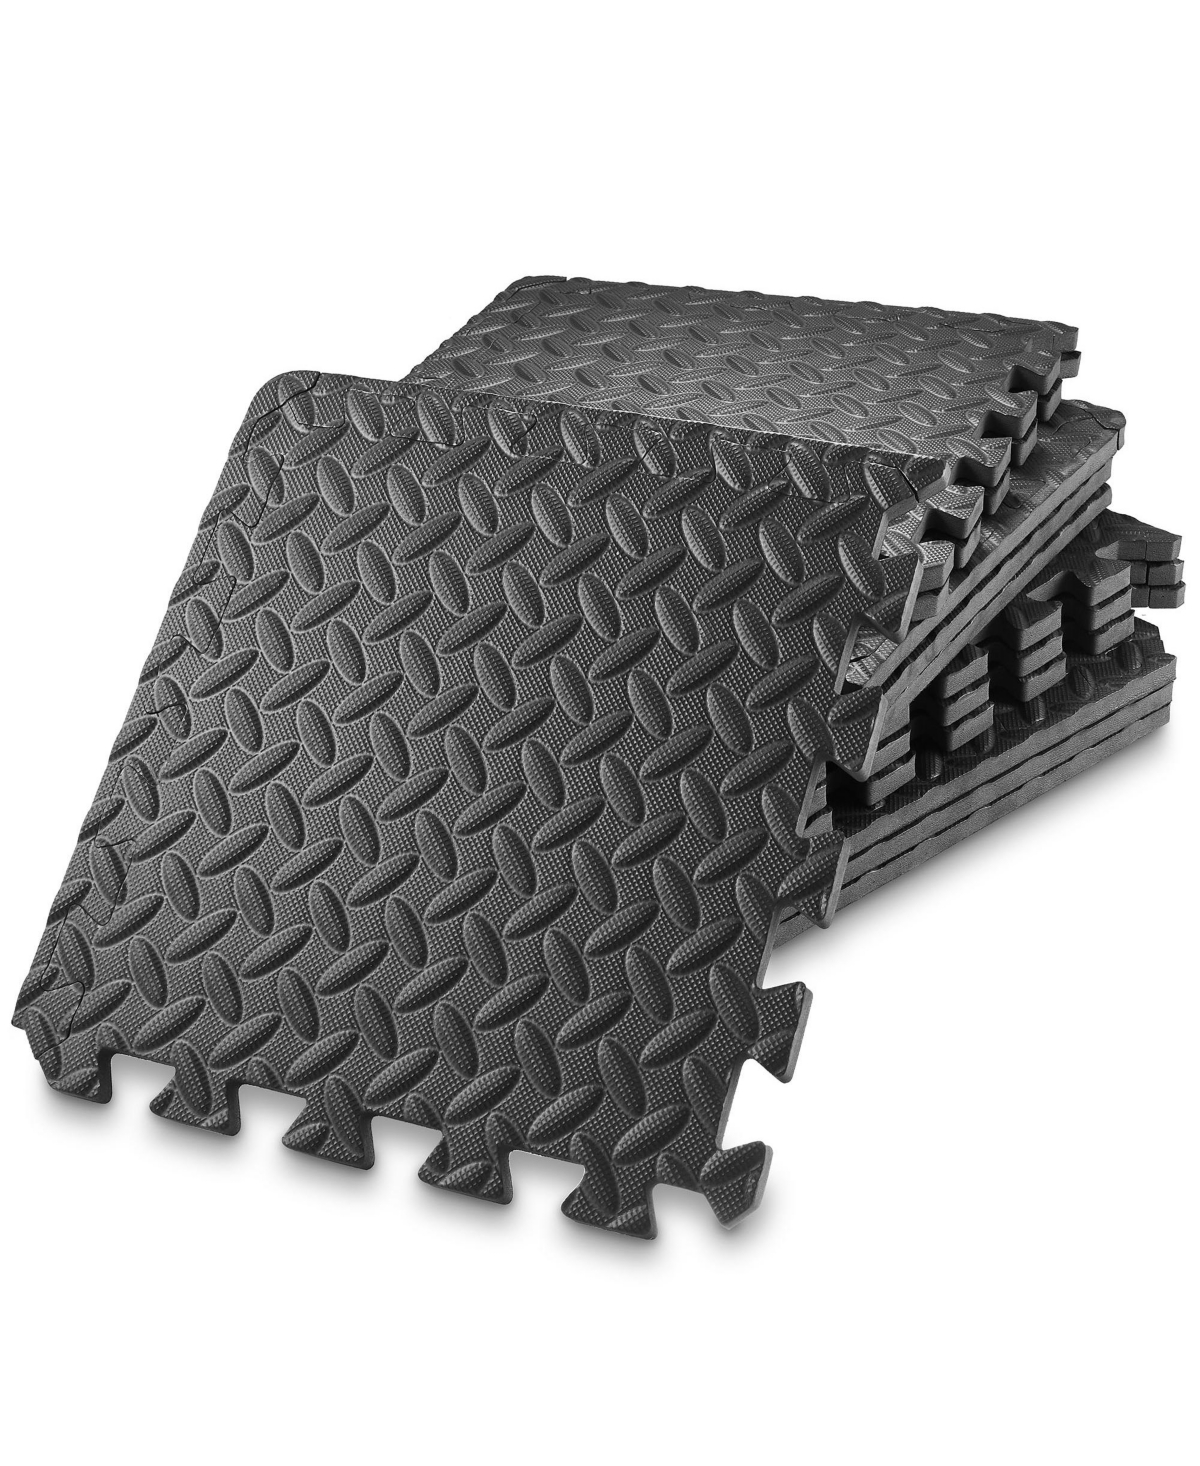 Pack of 12 Exercise Flooring Mats - 12 x 12 Inch Foam Rubber Interlocking Puzzle Floor Tiles - Black - Black